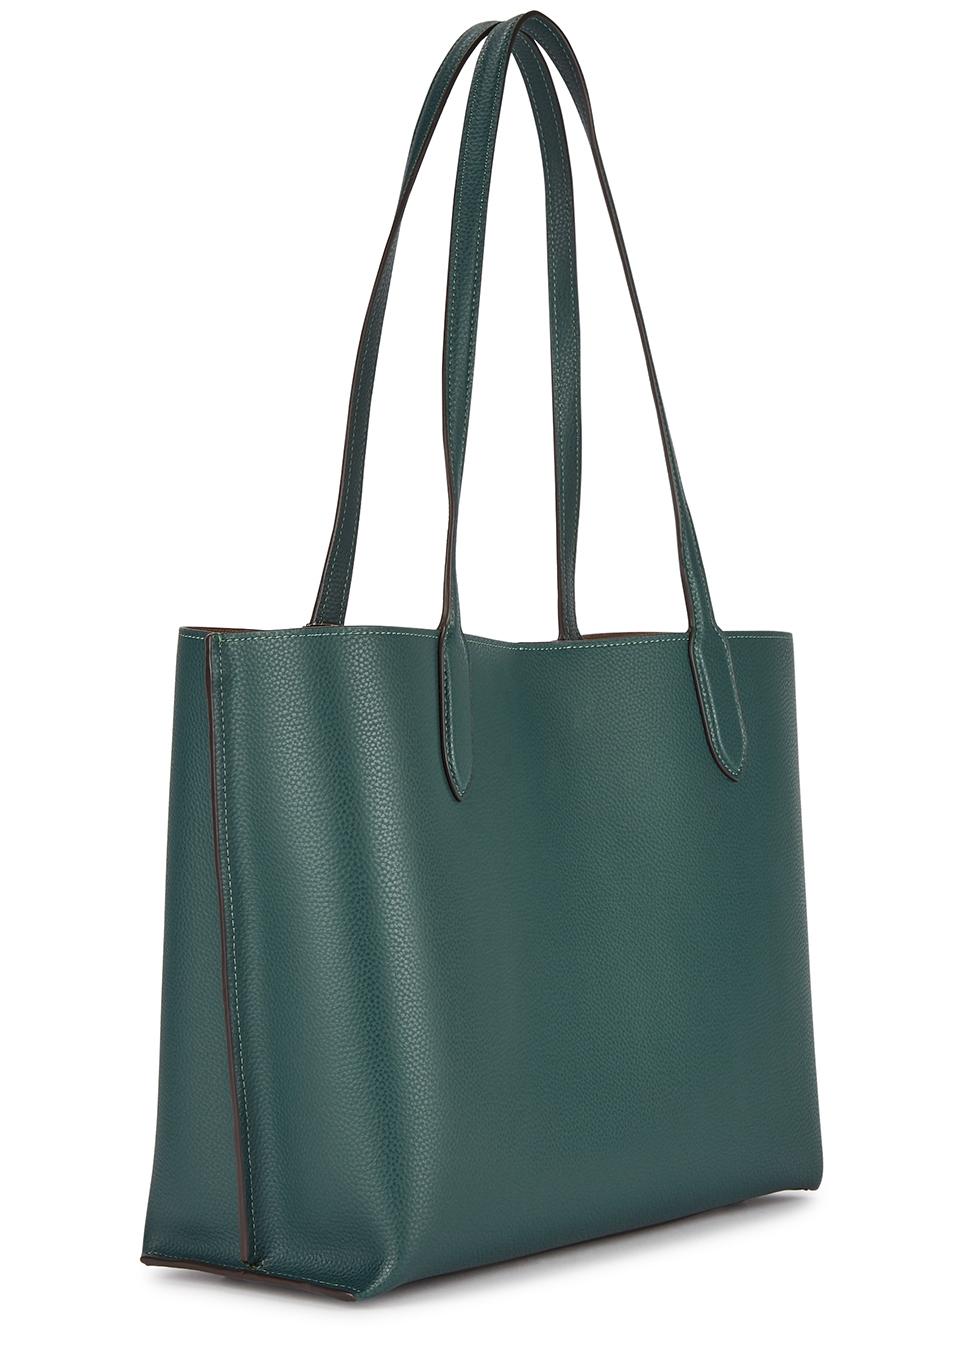 Coach green leather handbag - Gem